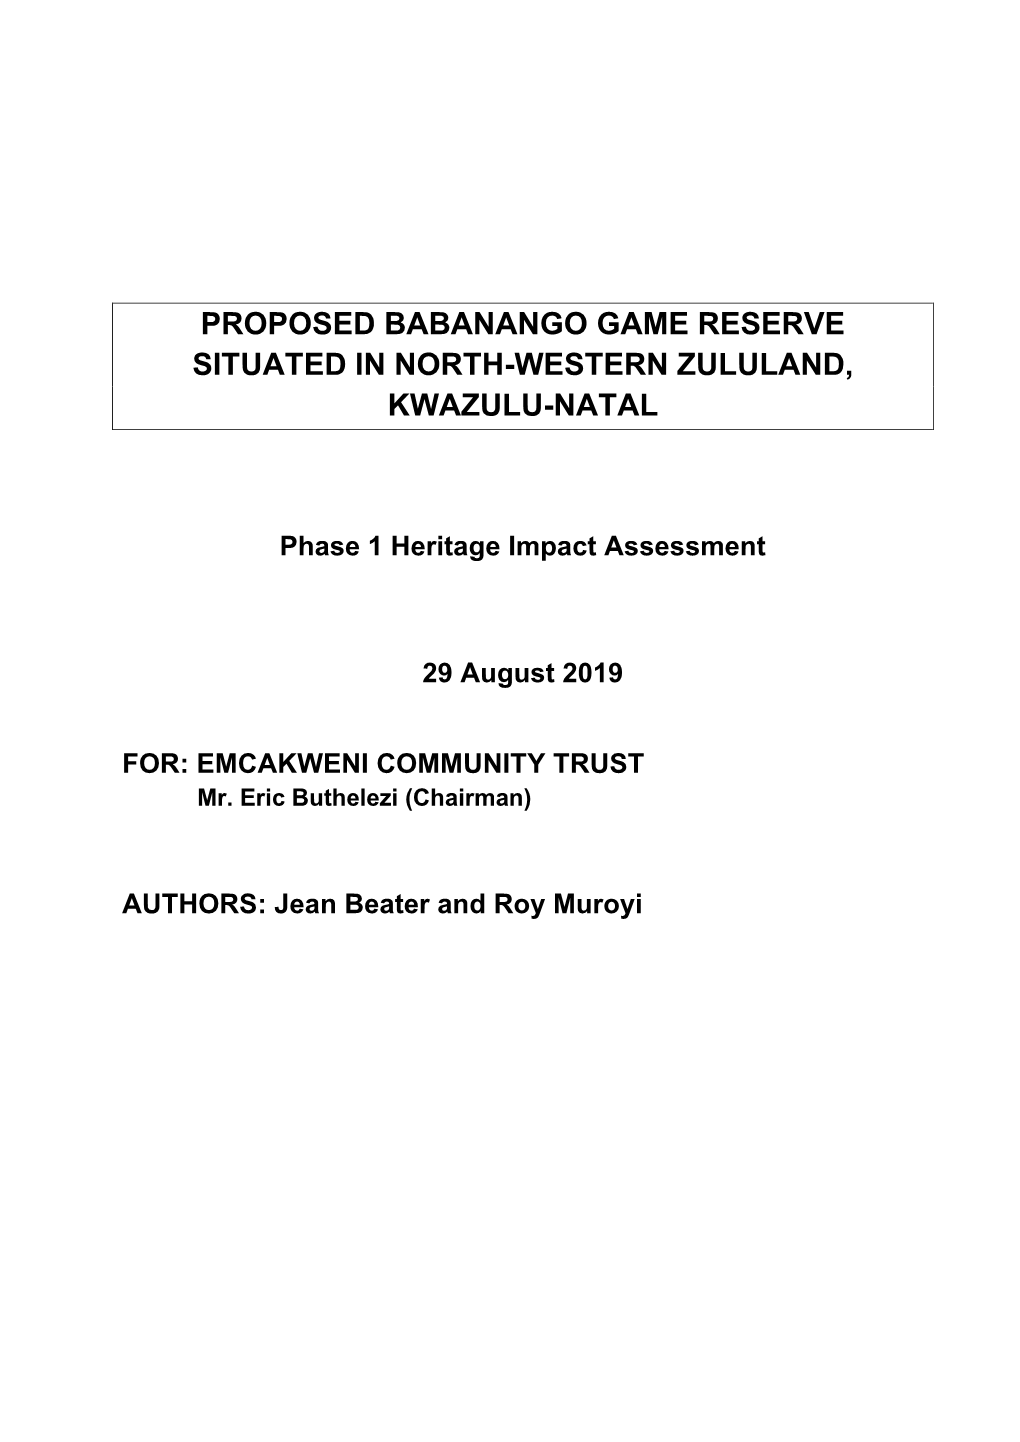 Proposed Babanango Game Reserve Situated in North-Western Zululand, Kwazulu-Natal